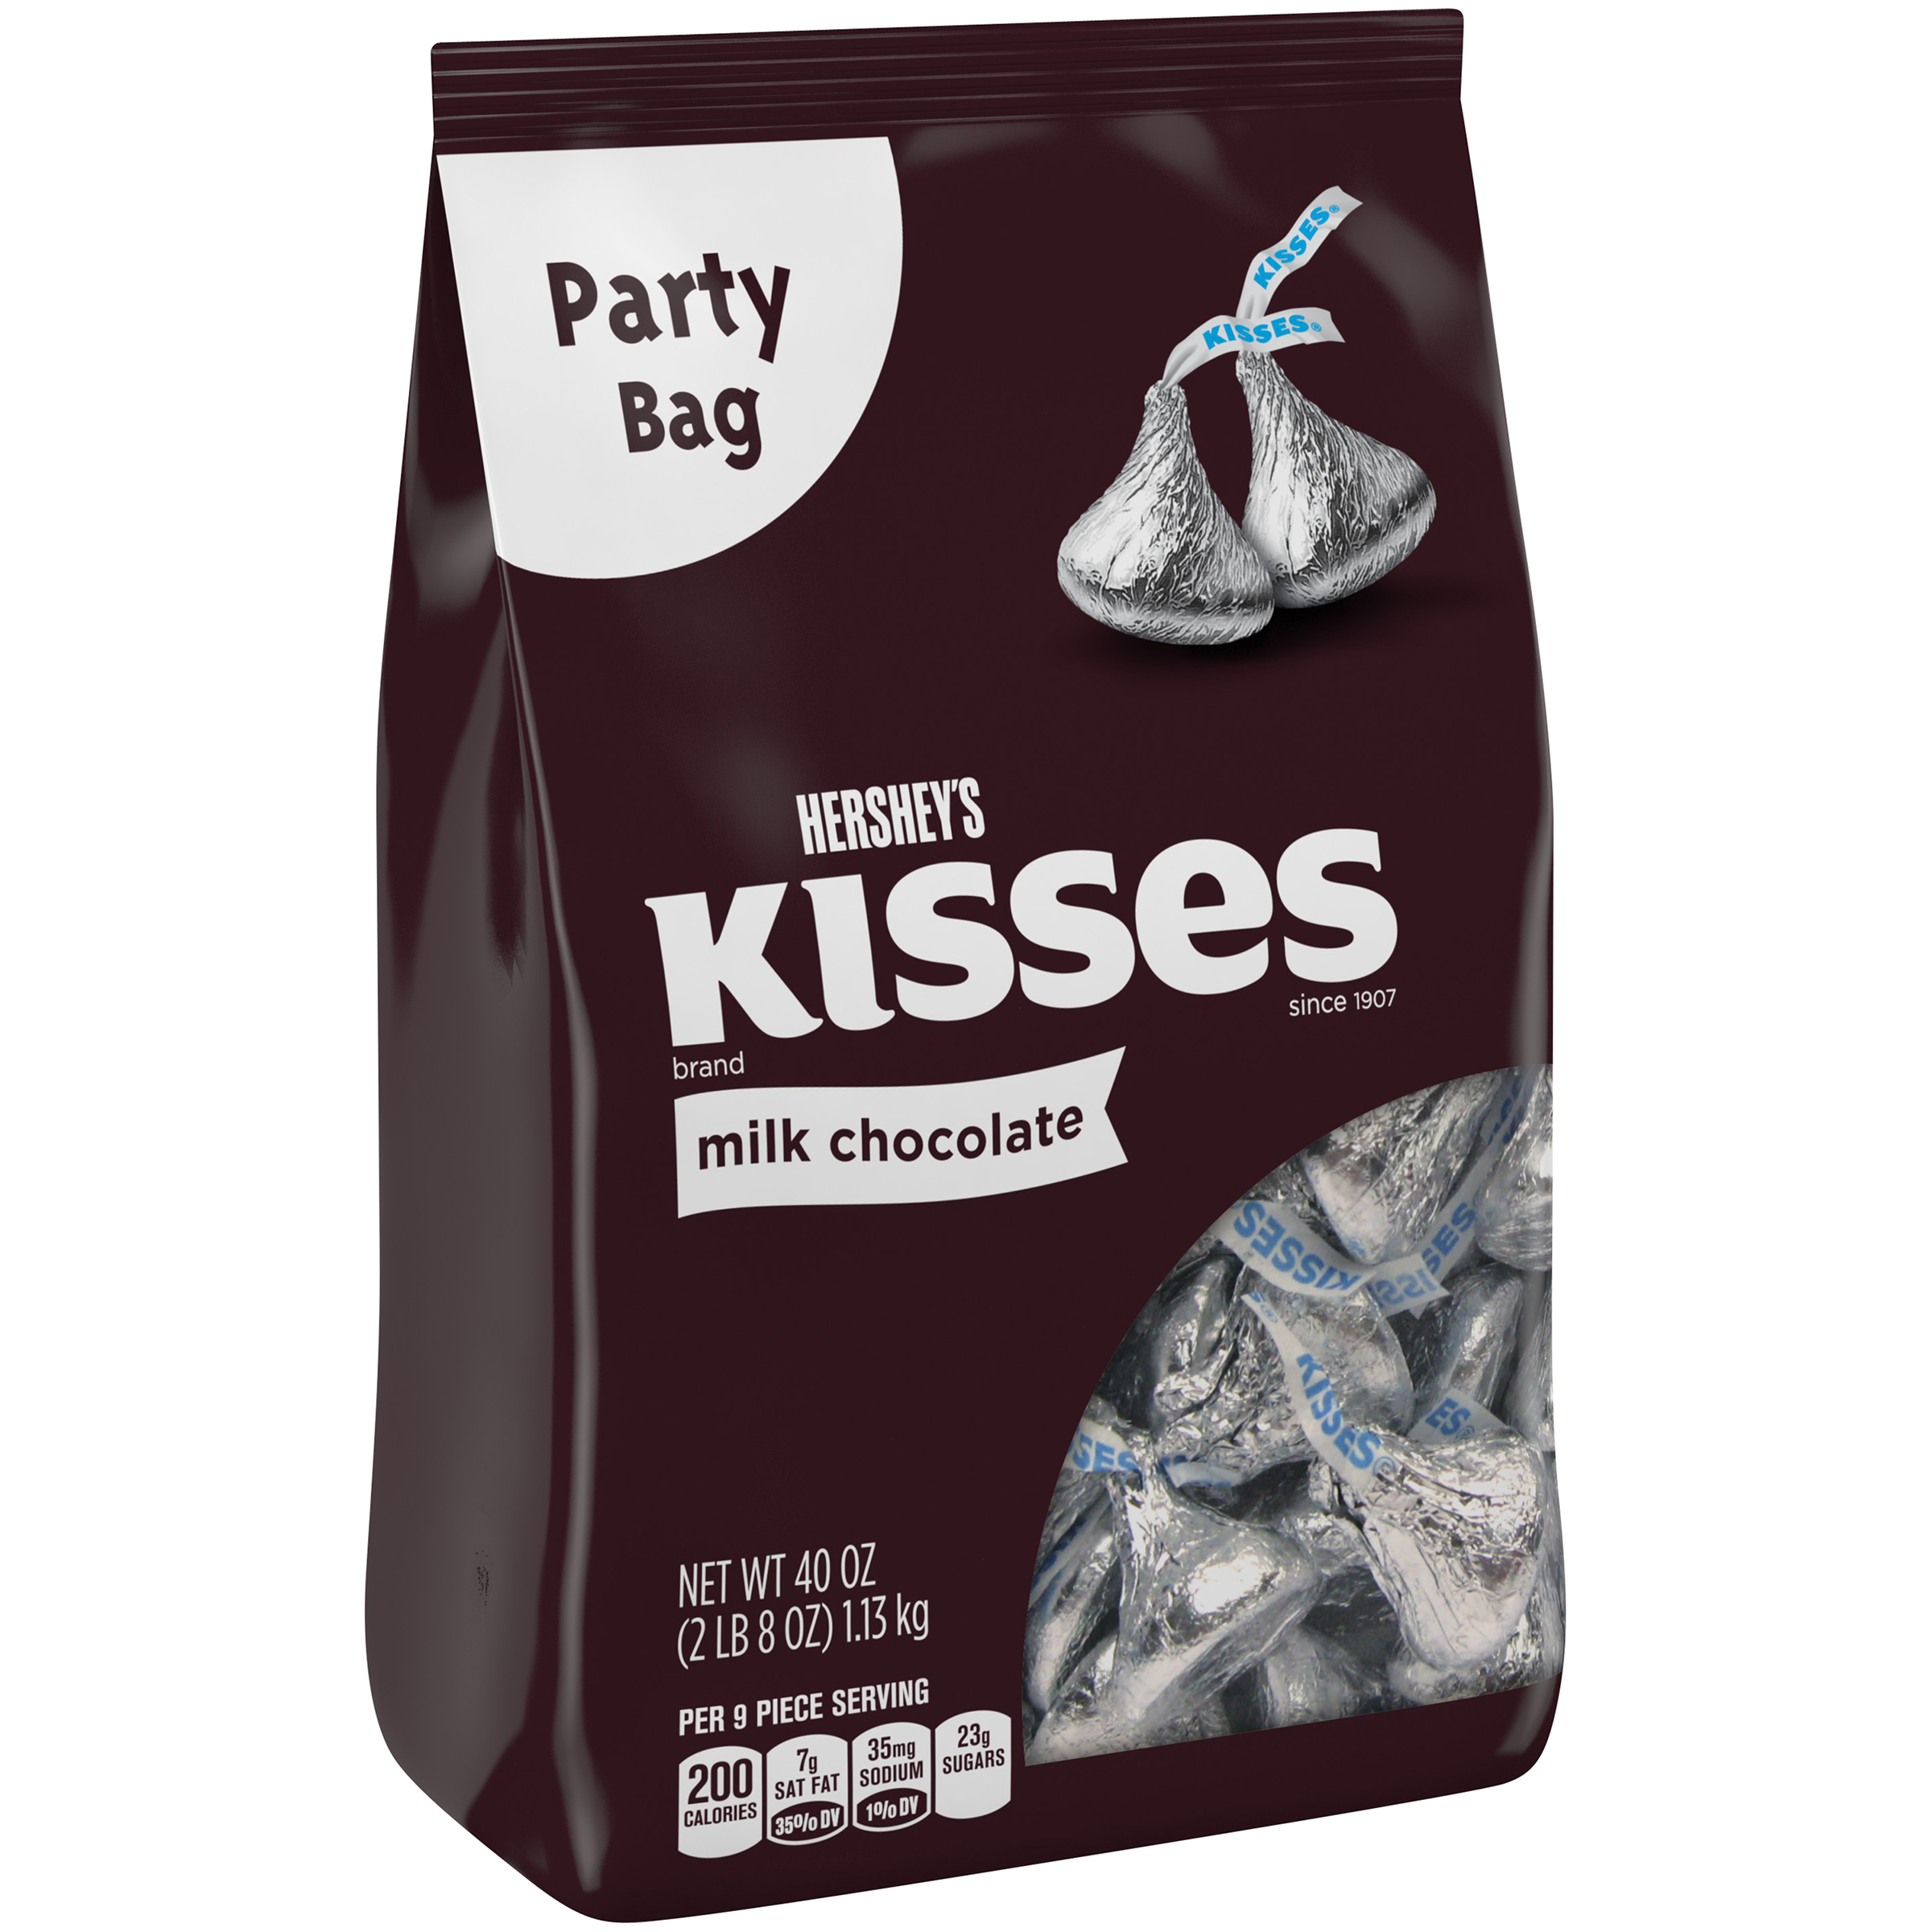 Hershey's Kisses, Milk Chocolate, 40 oz (2 lb 8 oz) 1.13 kg